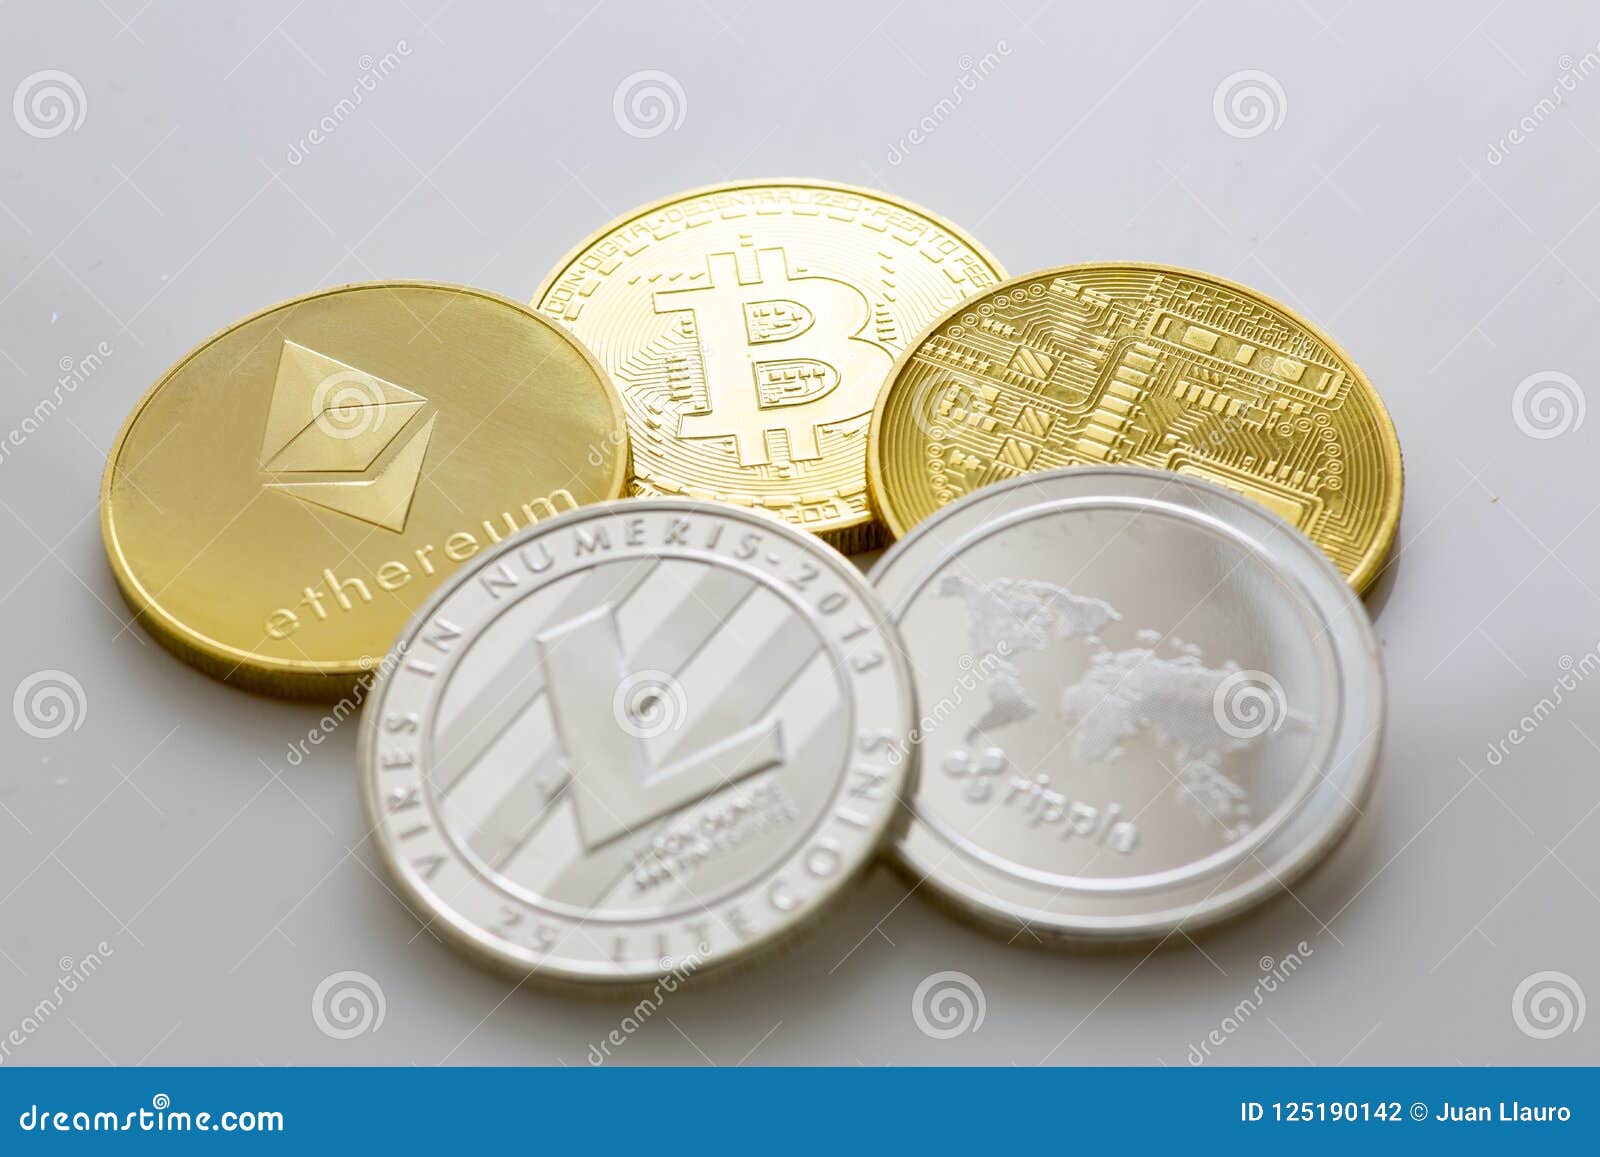 bitcoin vs otrher crypto currencies